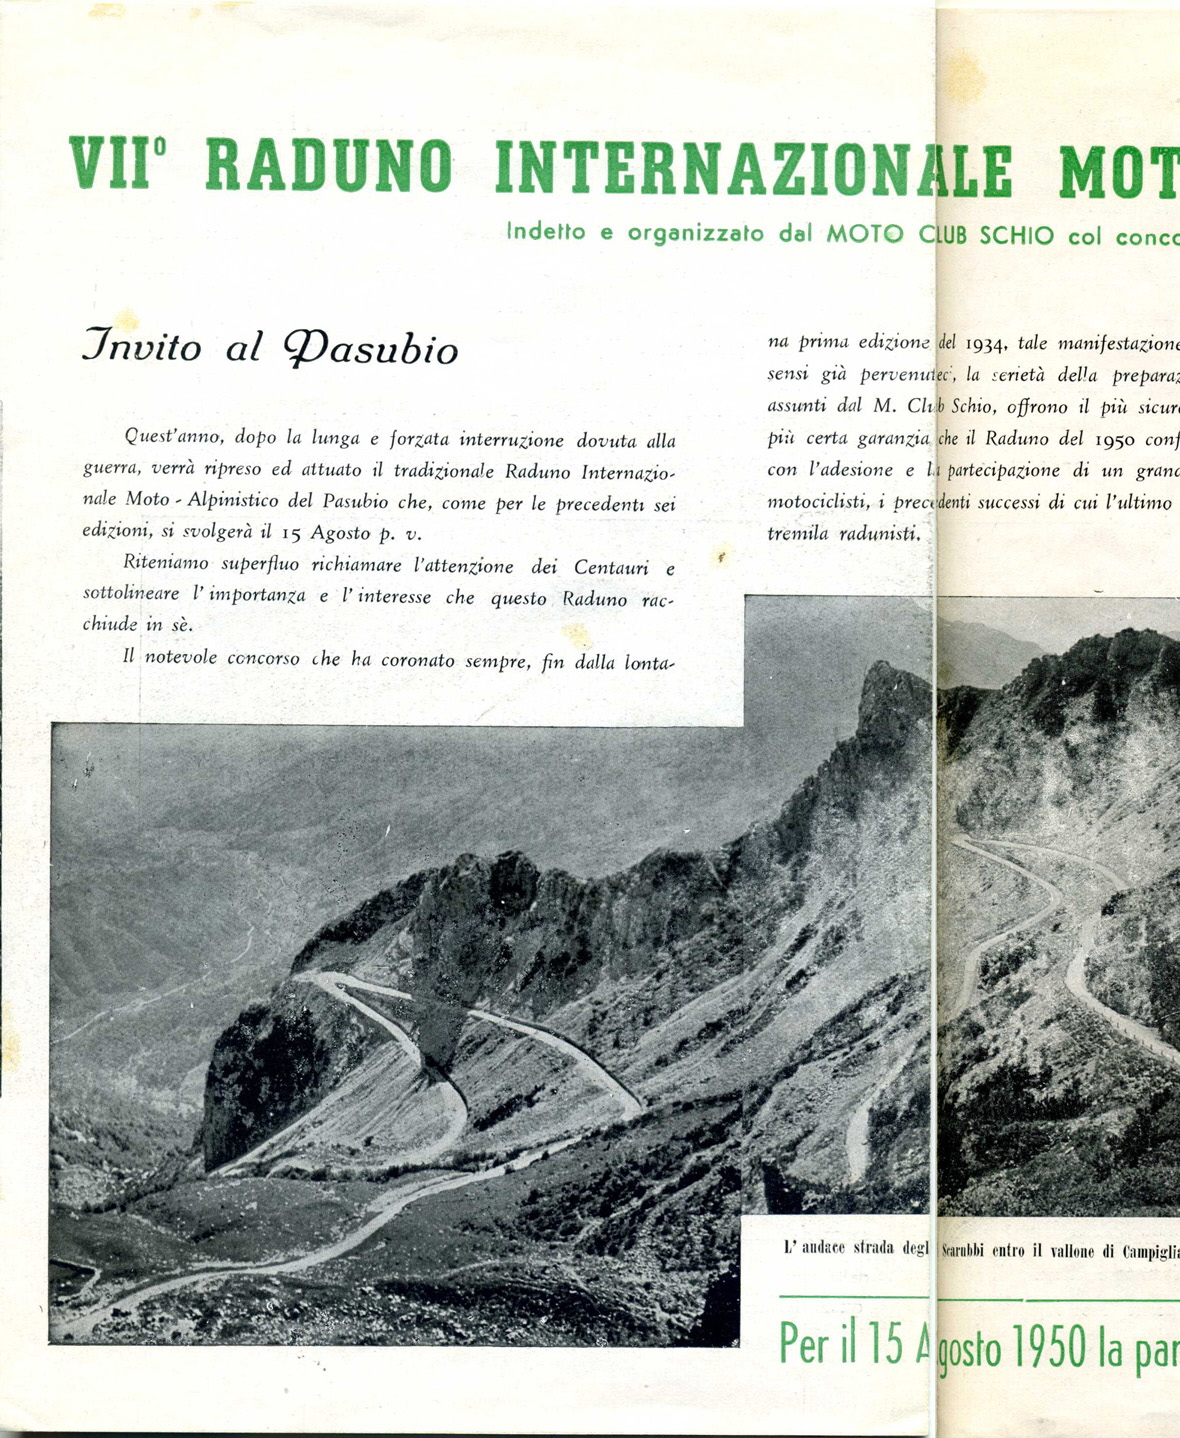 Mororaduno 1950